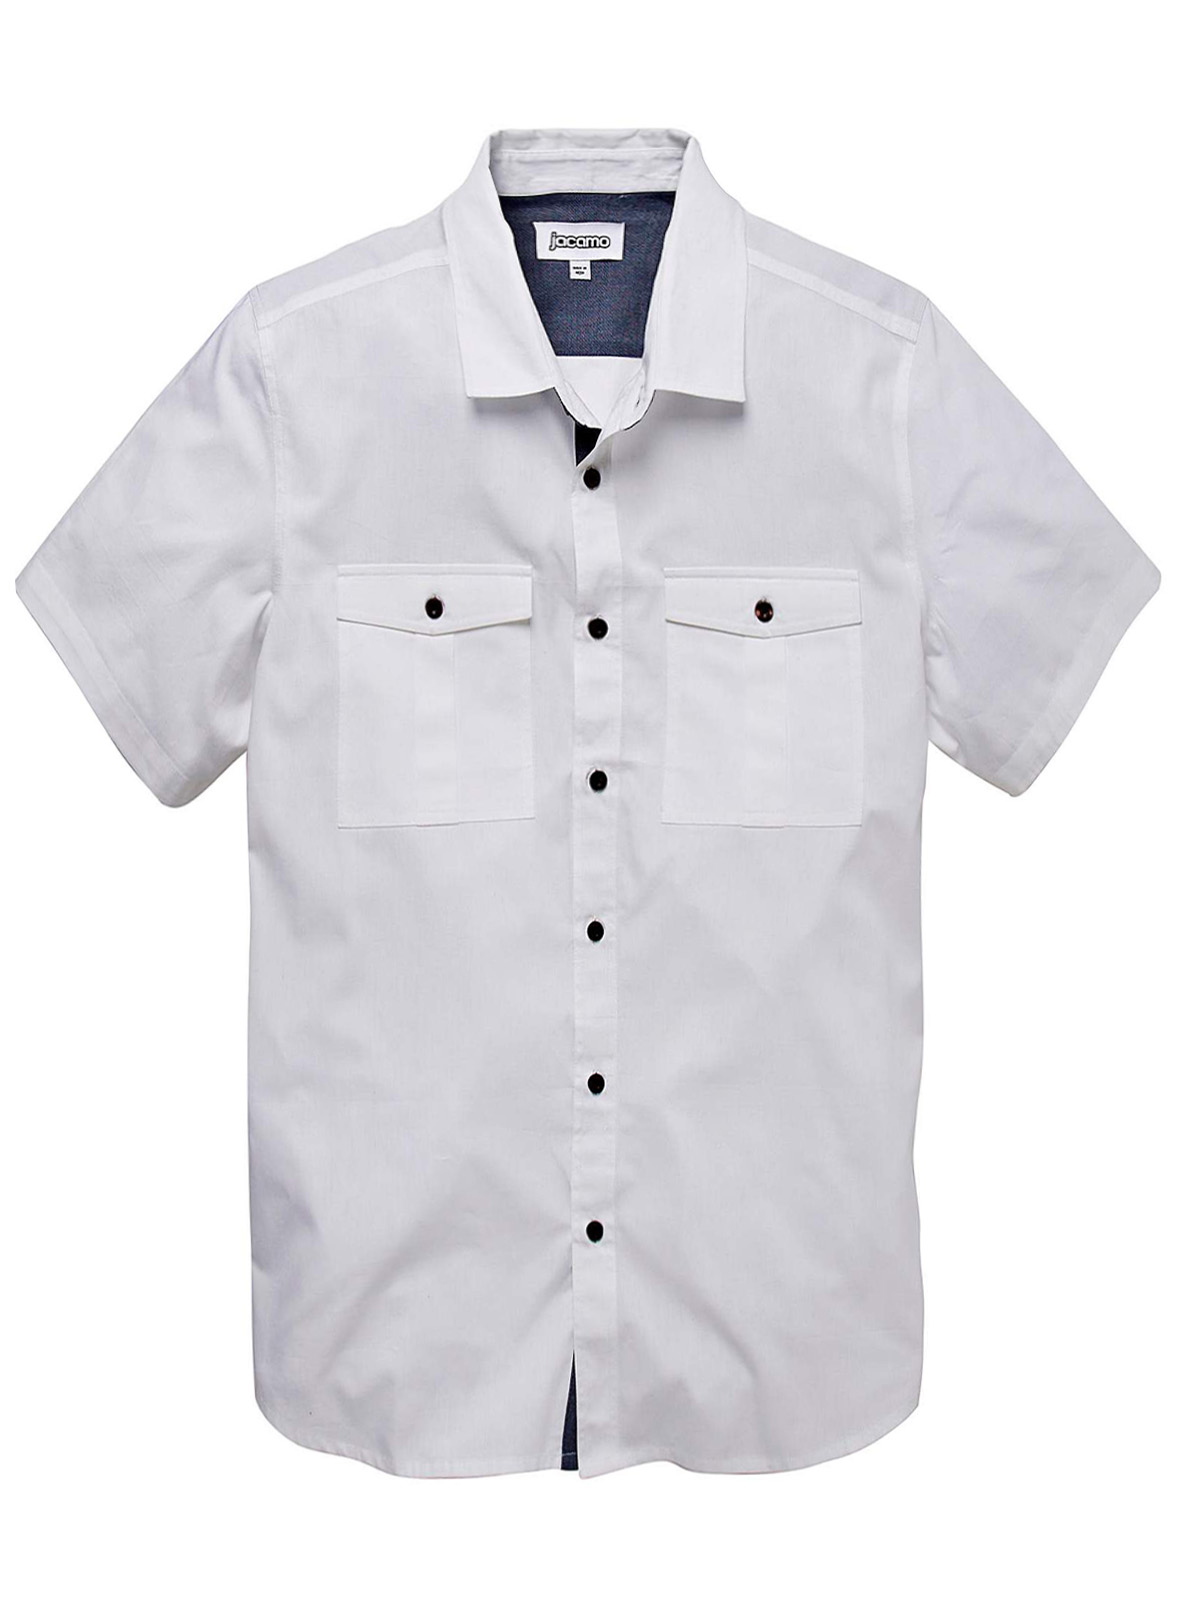 White @£9.99 Jacamo Mens T-Shirt 100% Cotton Size 3XL 